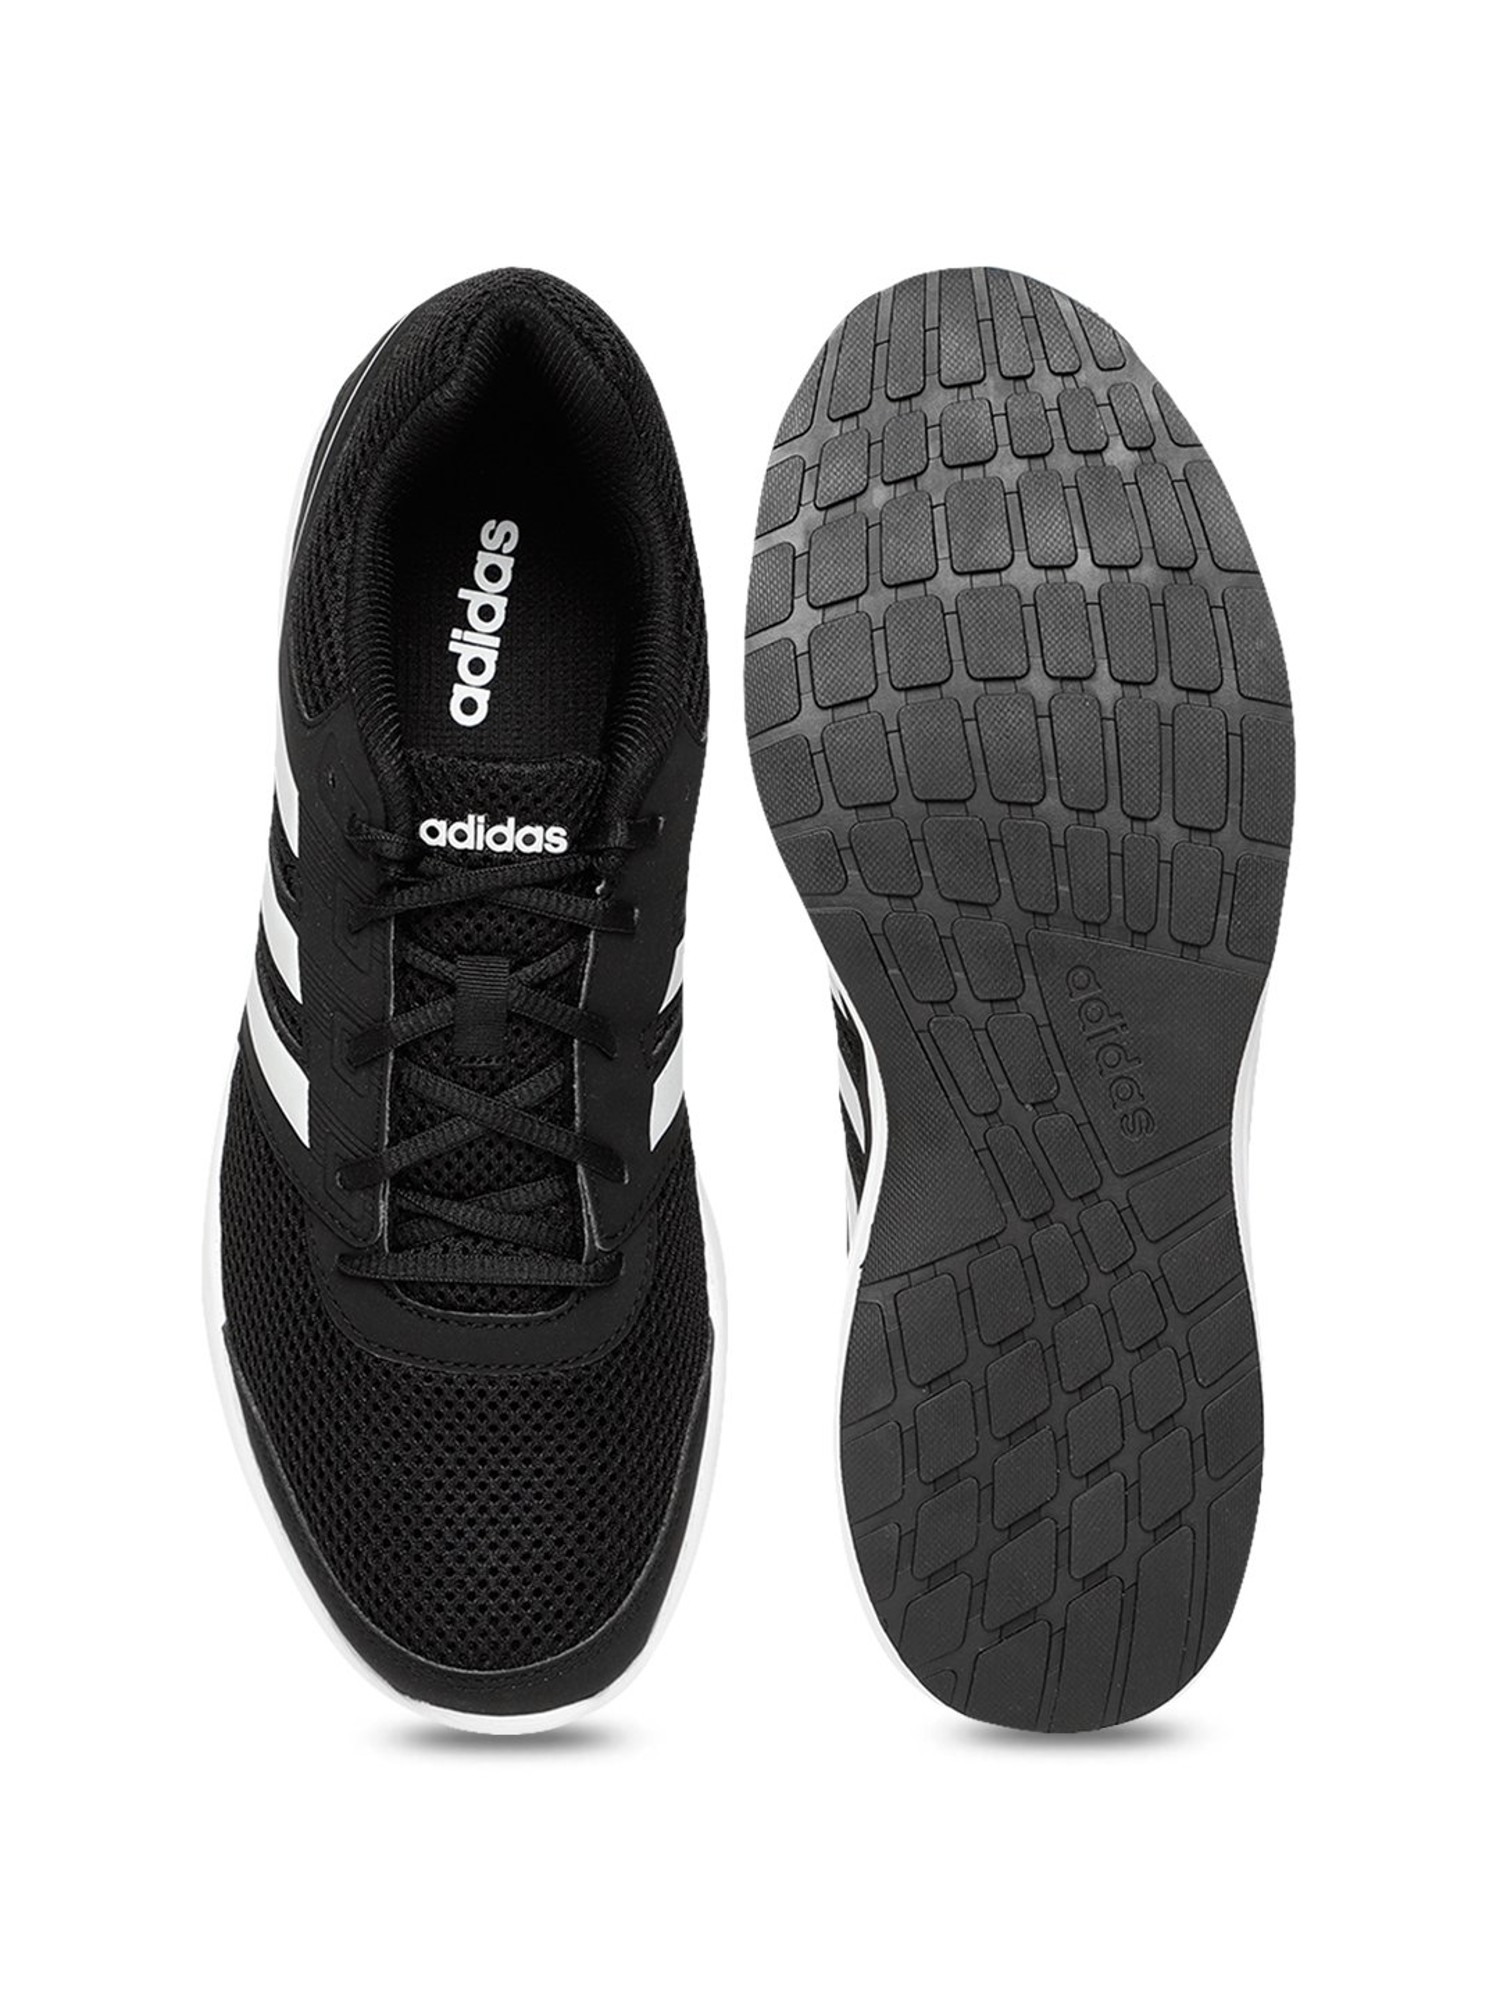 Adidas Hellion Z Black Running Shoes 